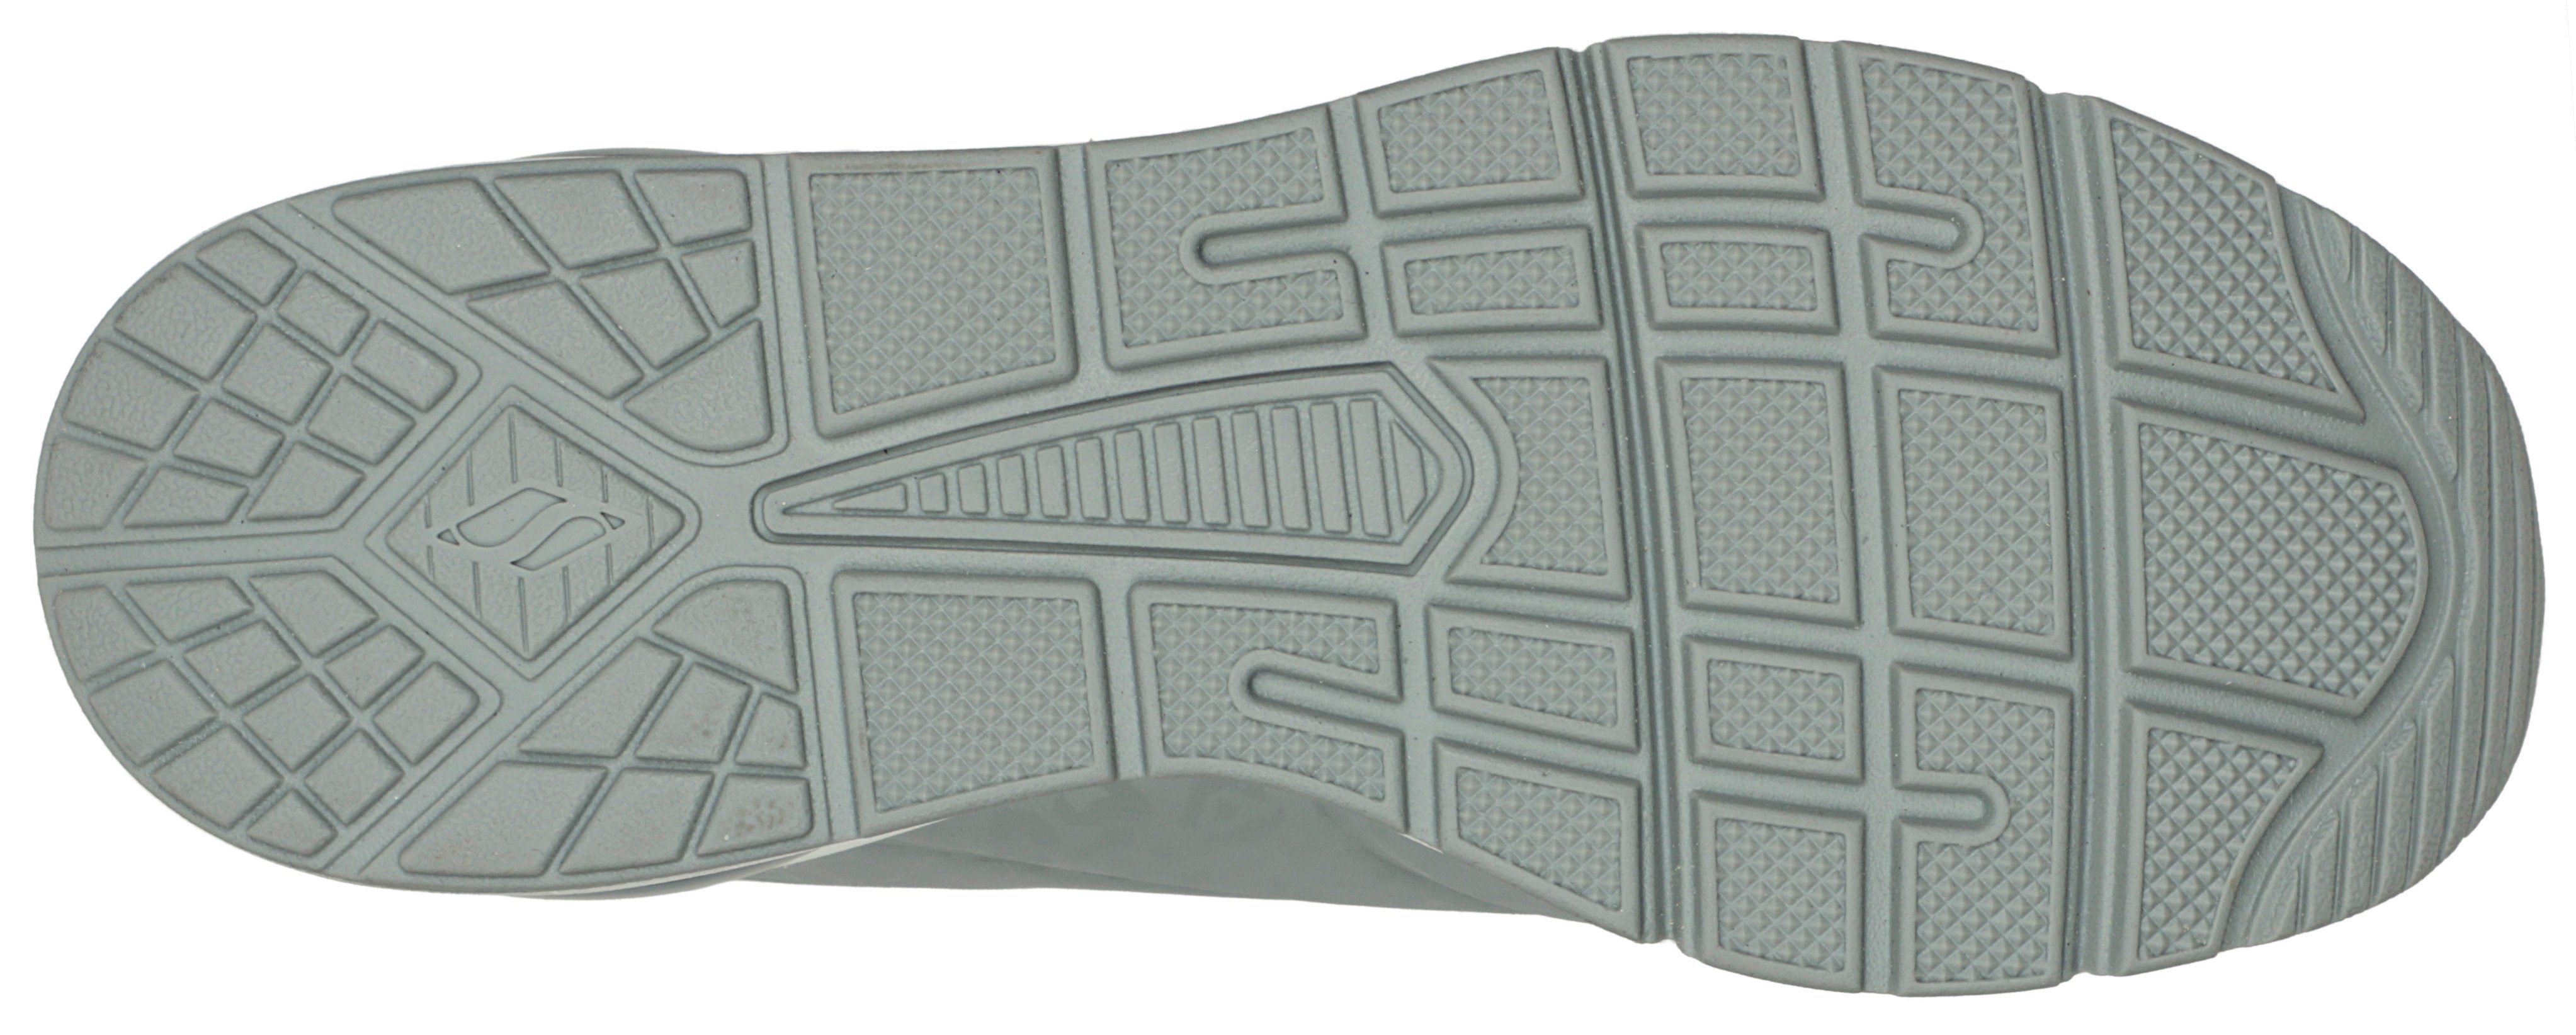 Sneaker grau IN-KAT-NEATO Skechers Skech-Air-Luftkammernsohle 2 - UNO mit